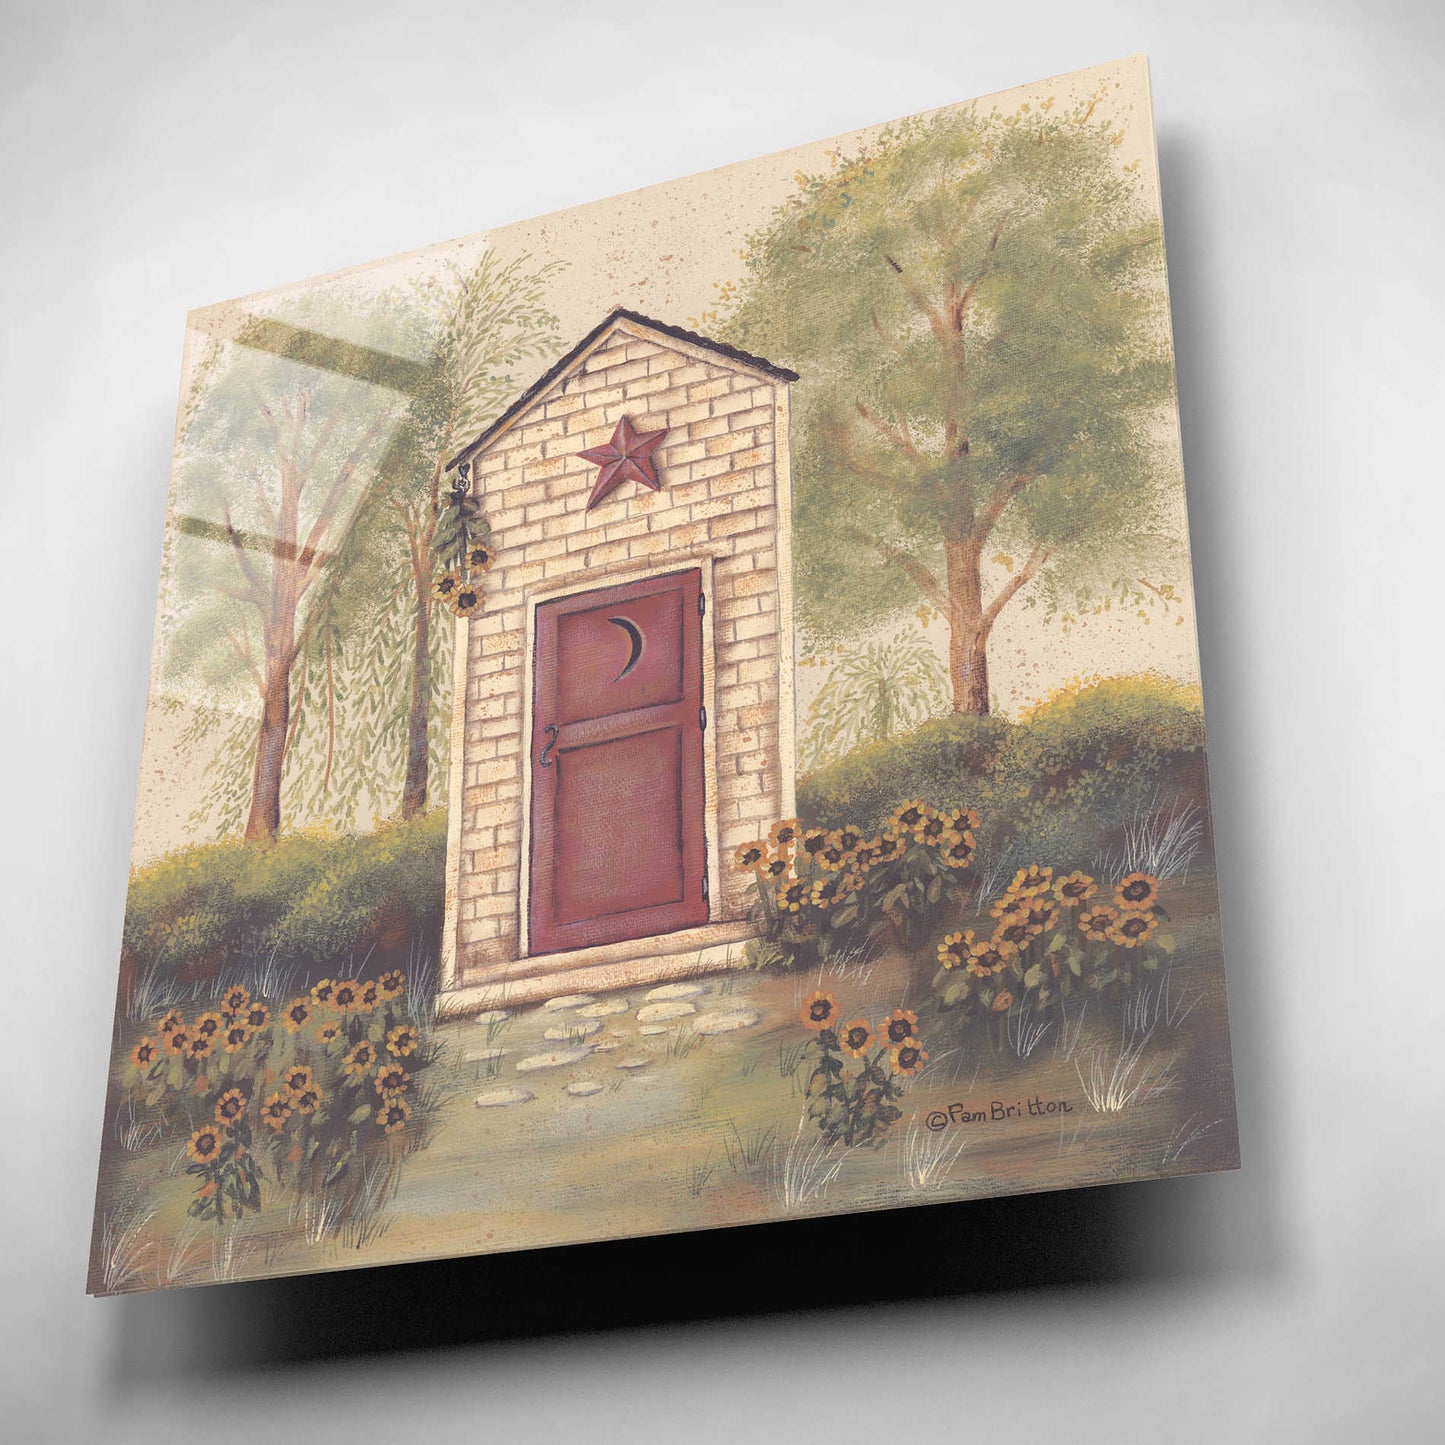 Epic Art 'Folk Art Outhouse III' by Pam Britton, Acrylic Glass Wall Art,12x12